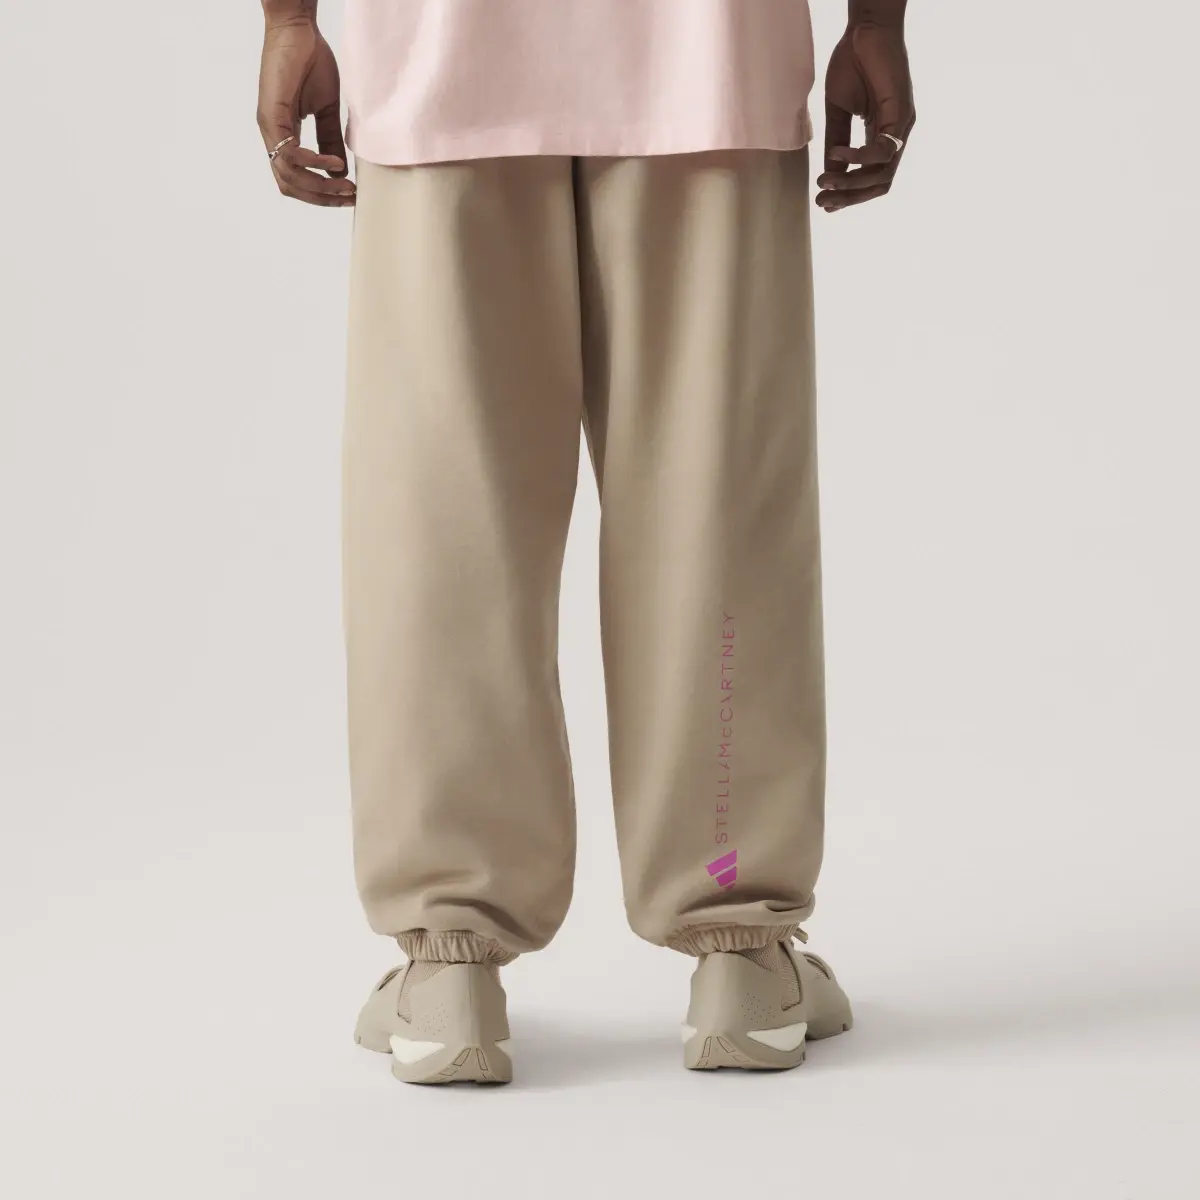 Adidas by Stella McCartney Sportswear Sweatpants (Gender Neutral). 3